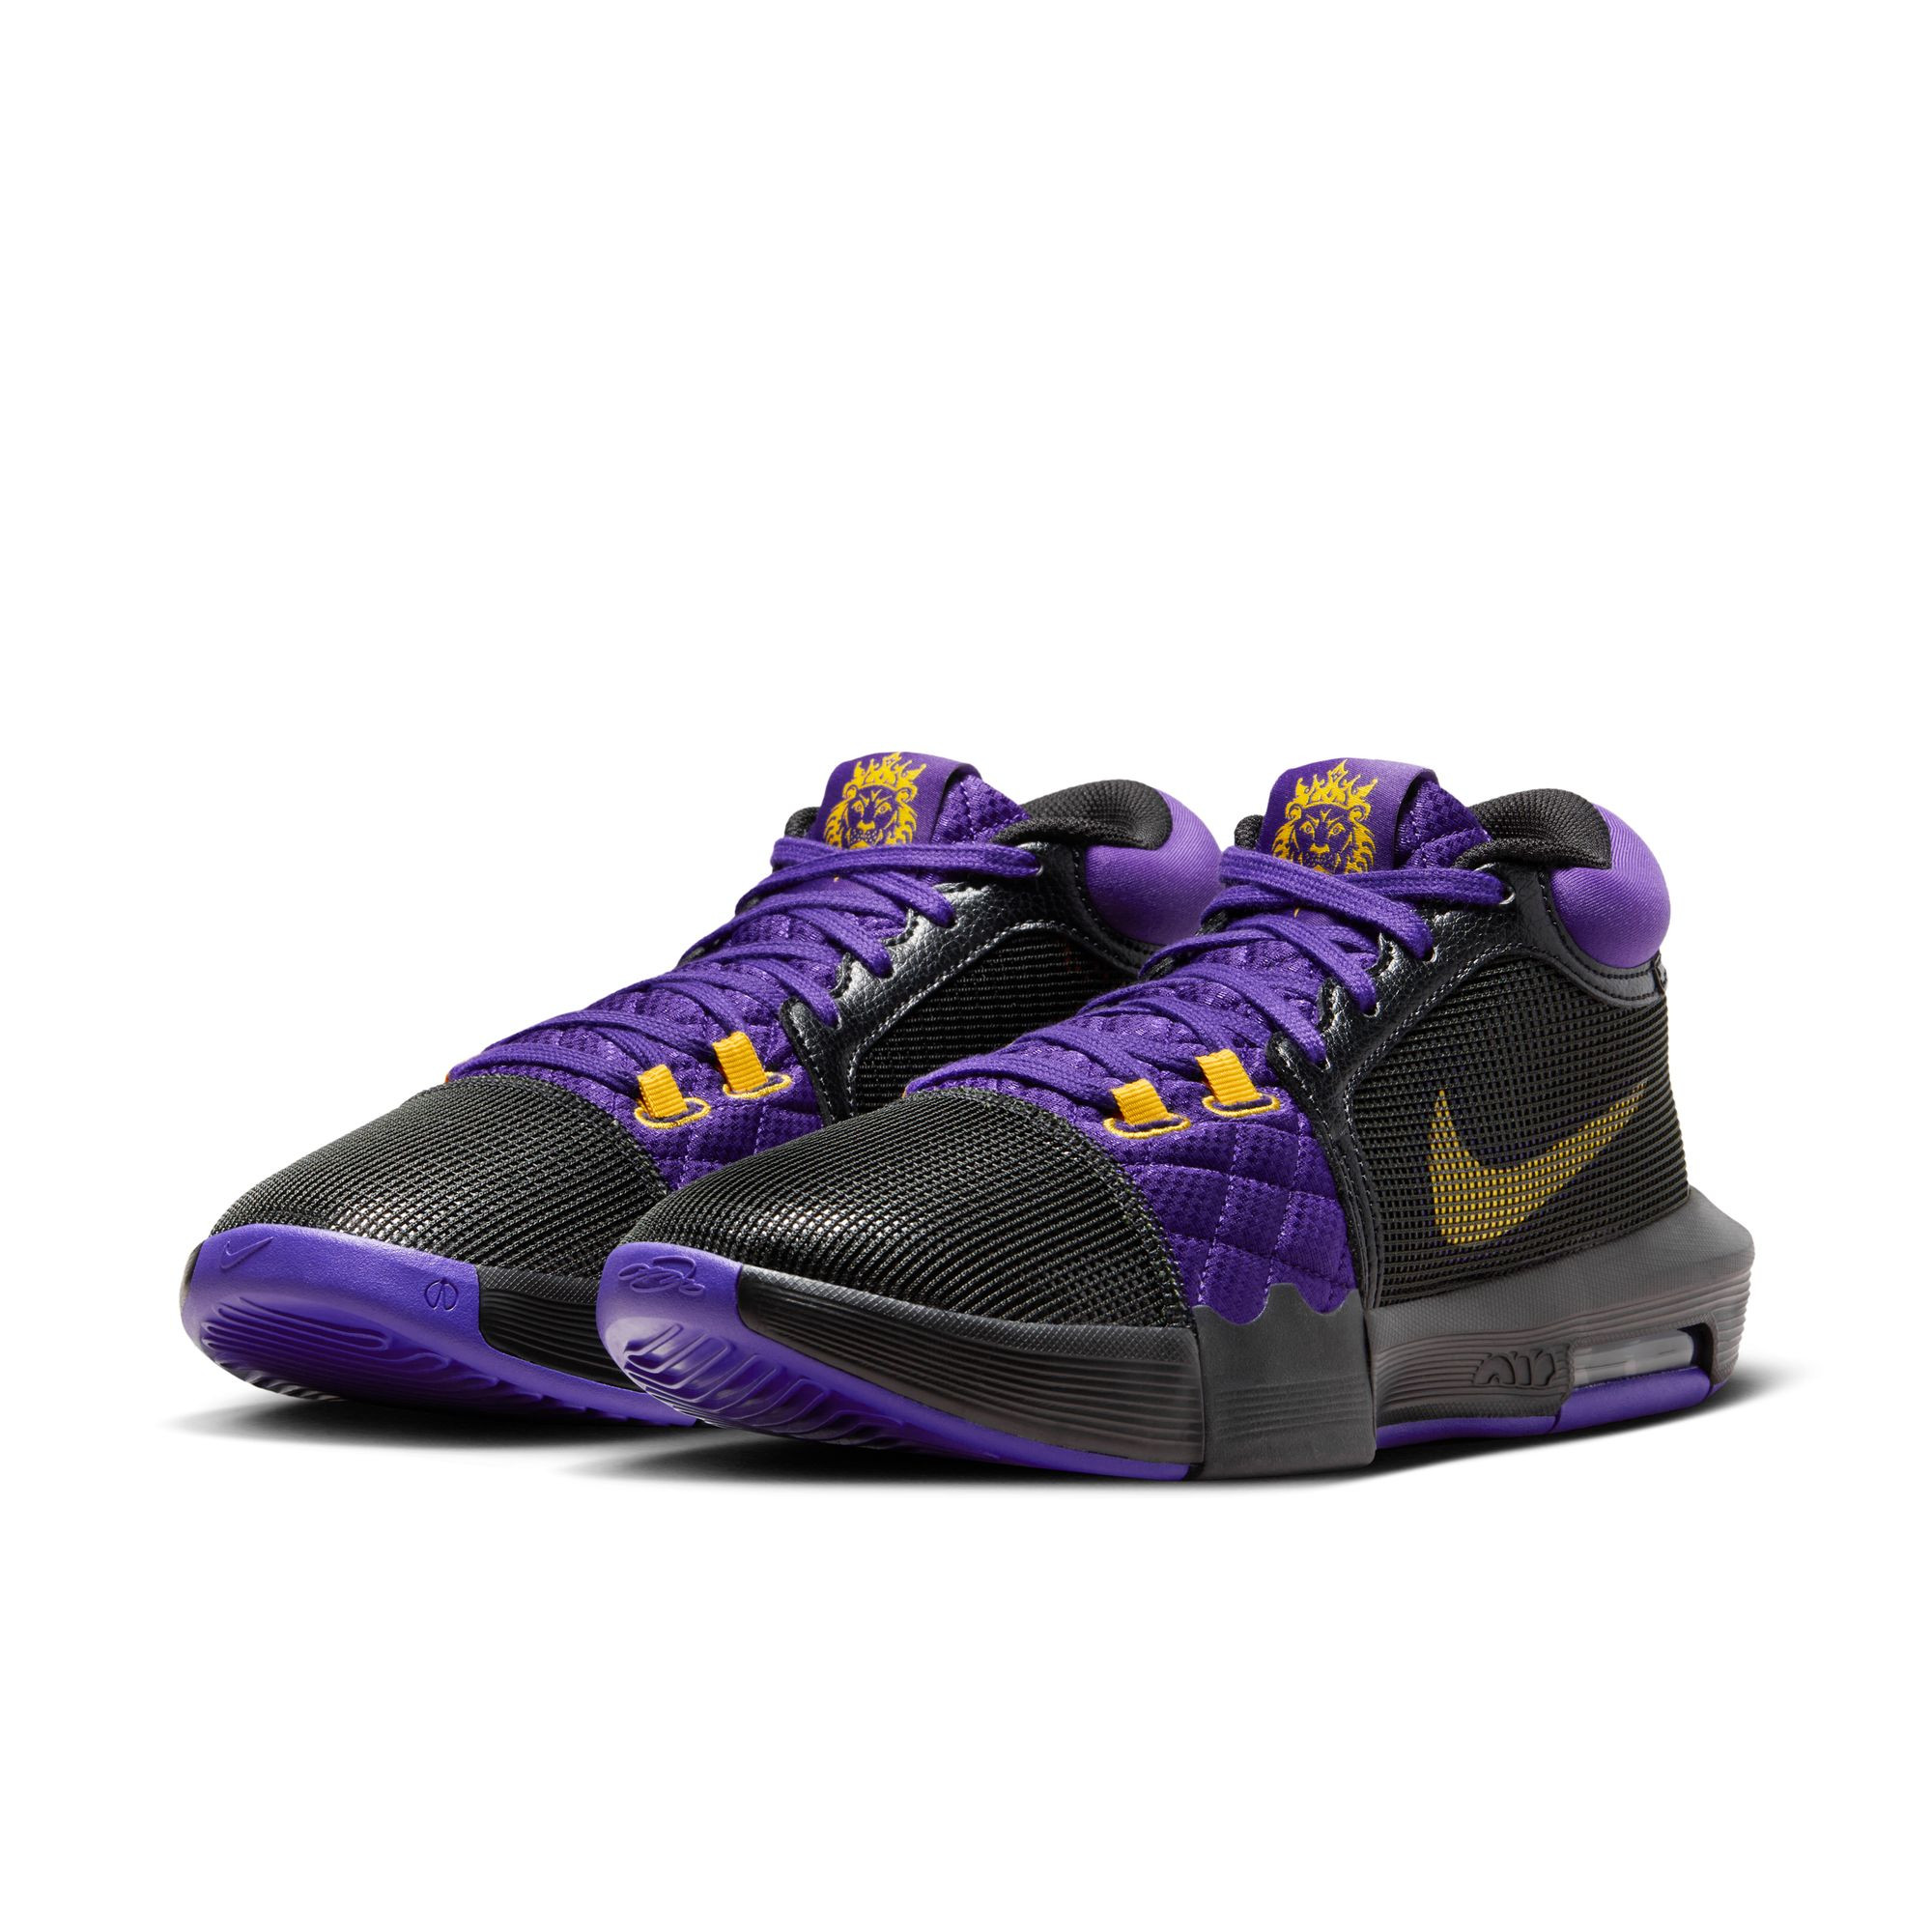 Chaussures Nike Lebron Witness VIII - Black/University Gold-Field Purple - FB2239-001